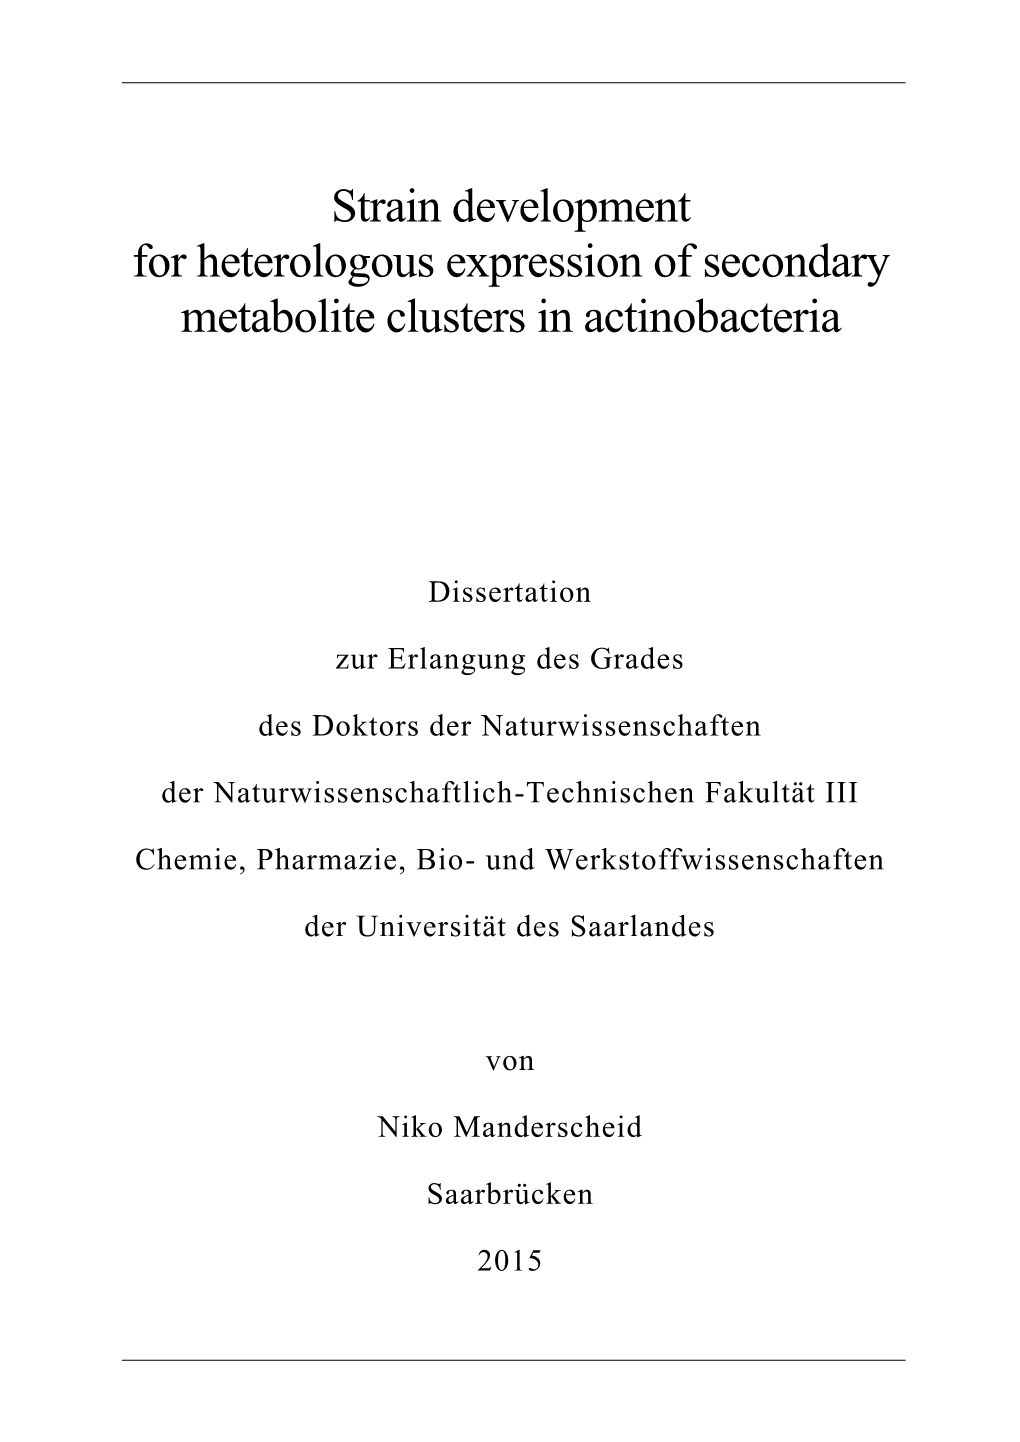 Strain Development for Heterologous Expression of Secondary Metabolite Clusters in Actinobacteria